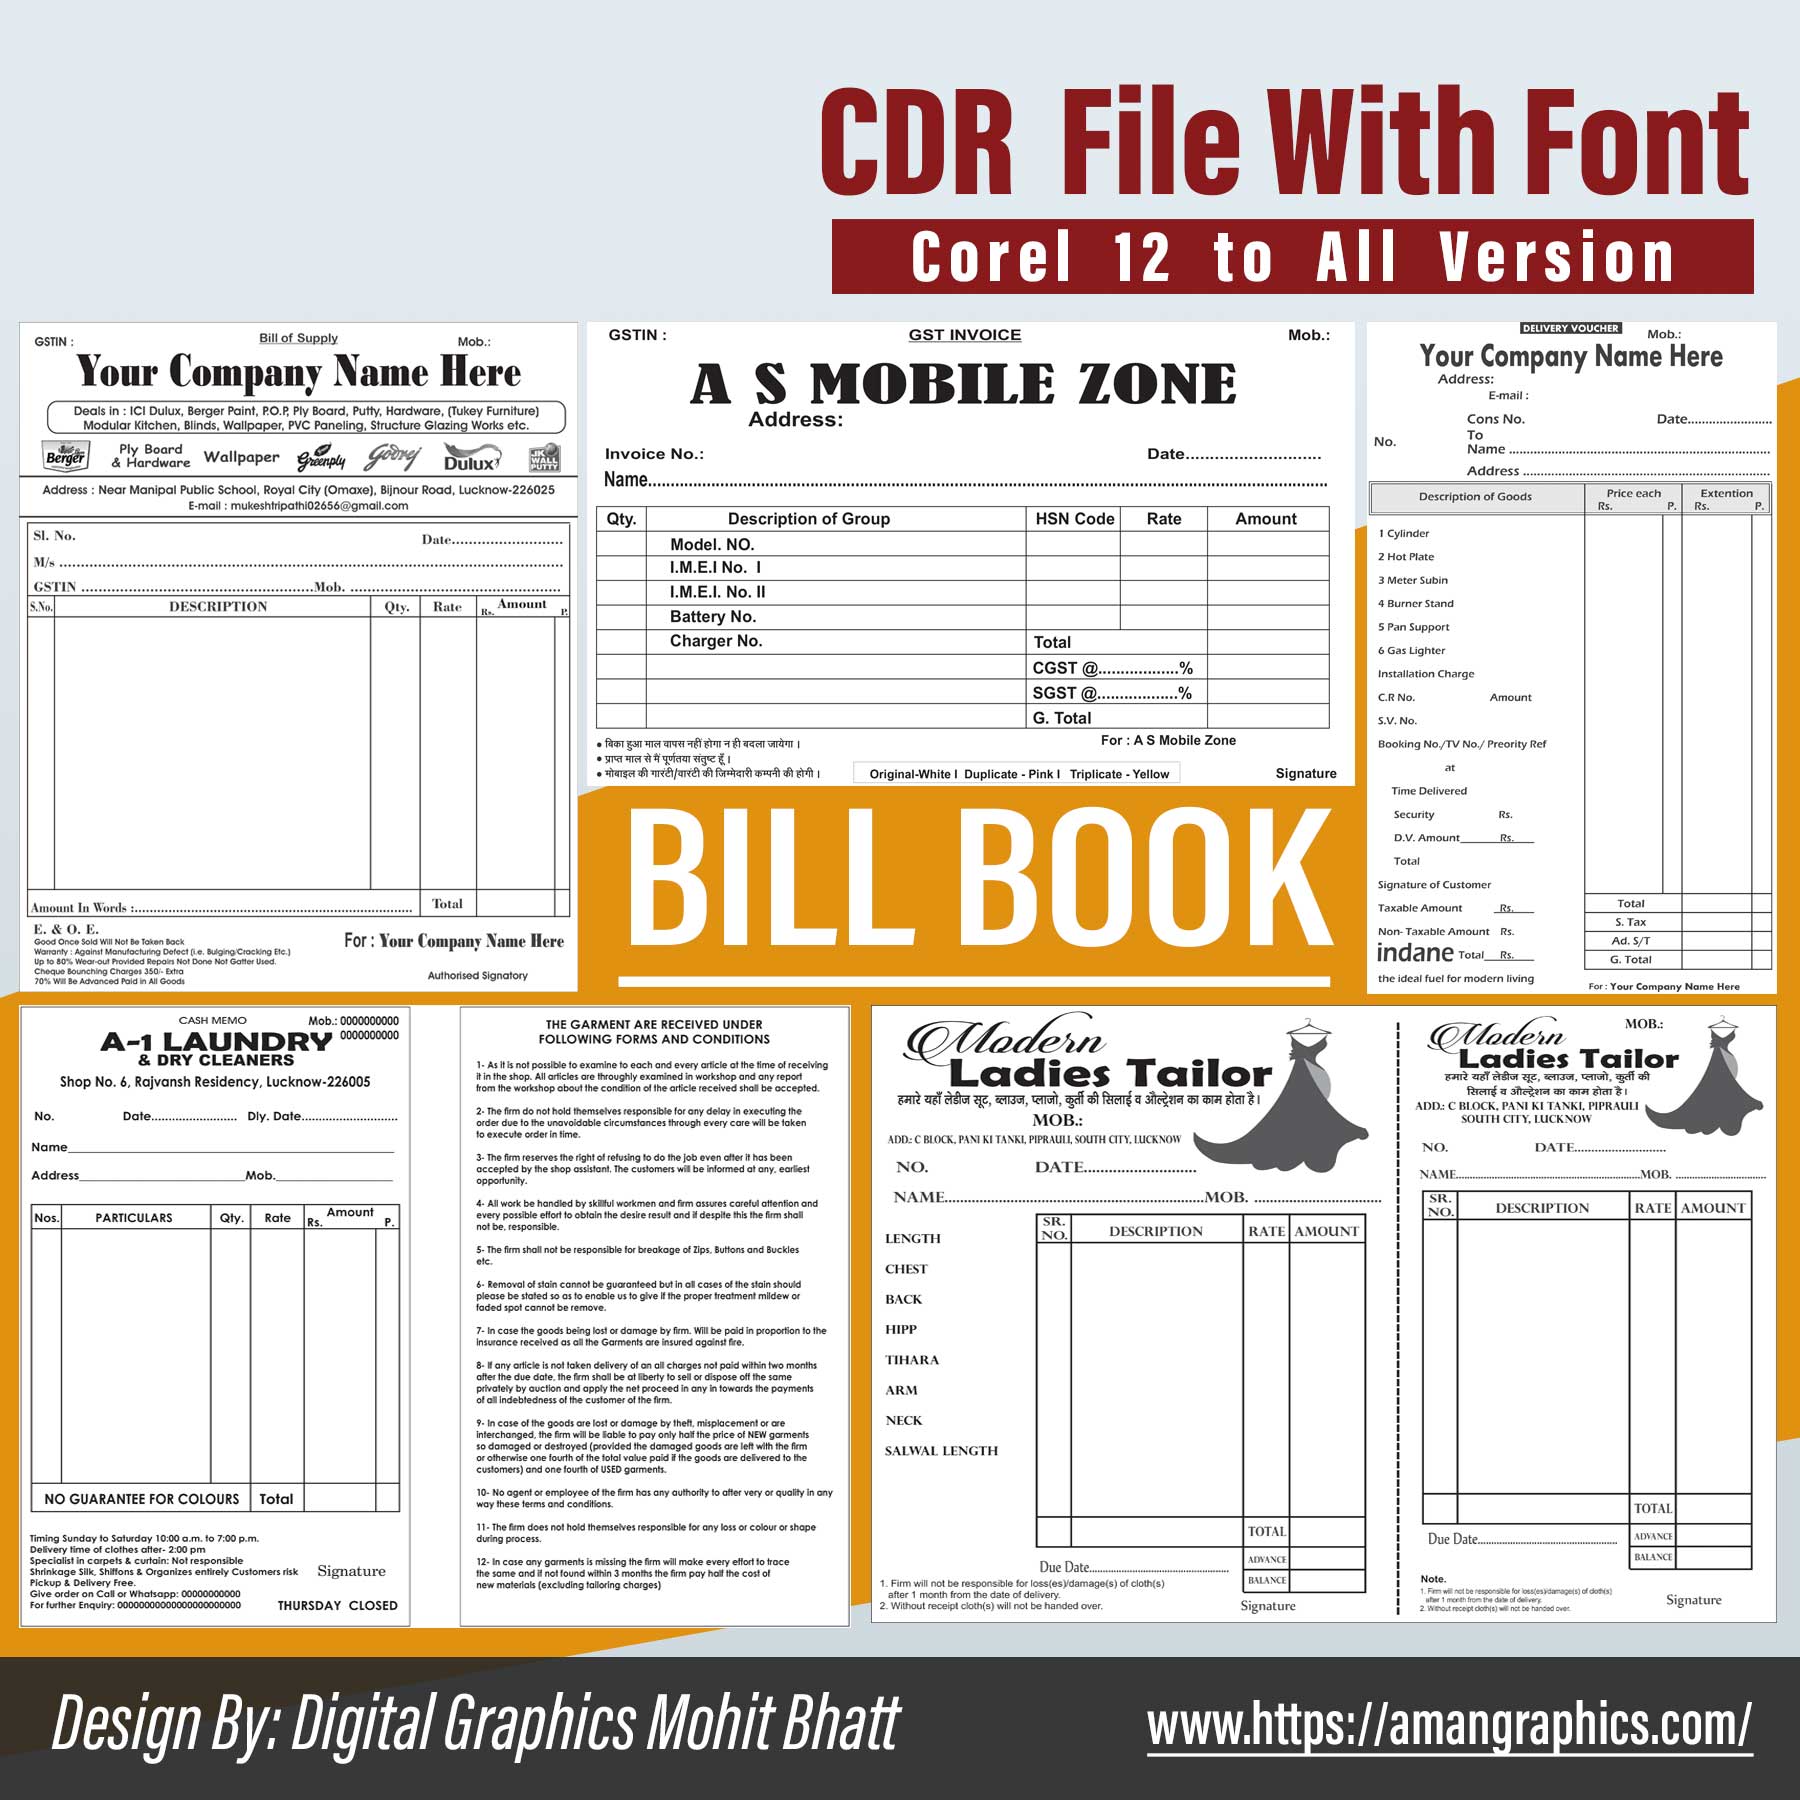 Bill Book Design CDR File Package BILL BOOK BILL BOOK,BILL BOOK DESIGN,BILL BOOK DESIGN CDR FILE,BILL BOOK DESIGN CDR FILE PACKAGE,DIGITAL GRAPHIC MOHIT BHATT,DIGITAL GRAPHICS MOHIT BHATT